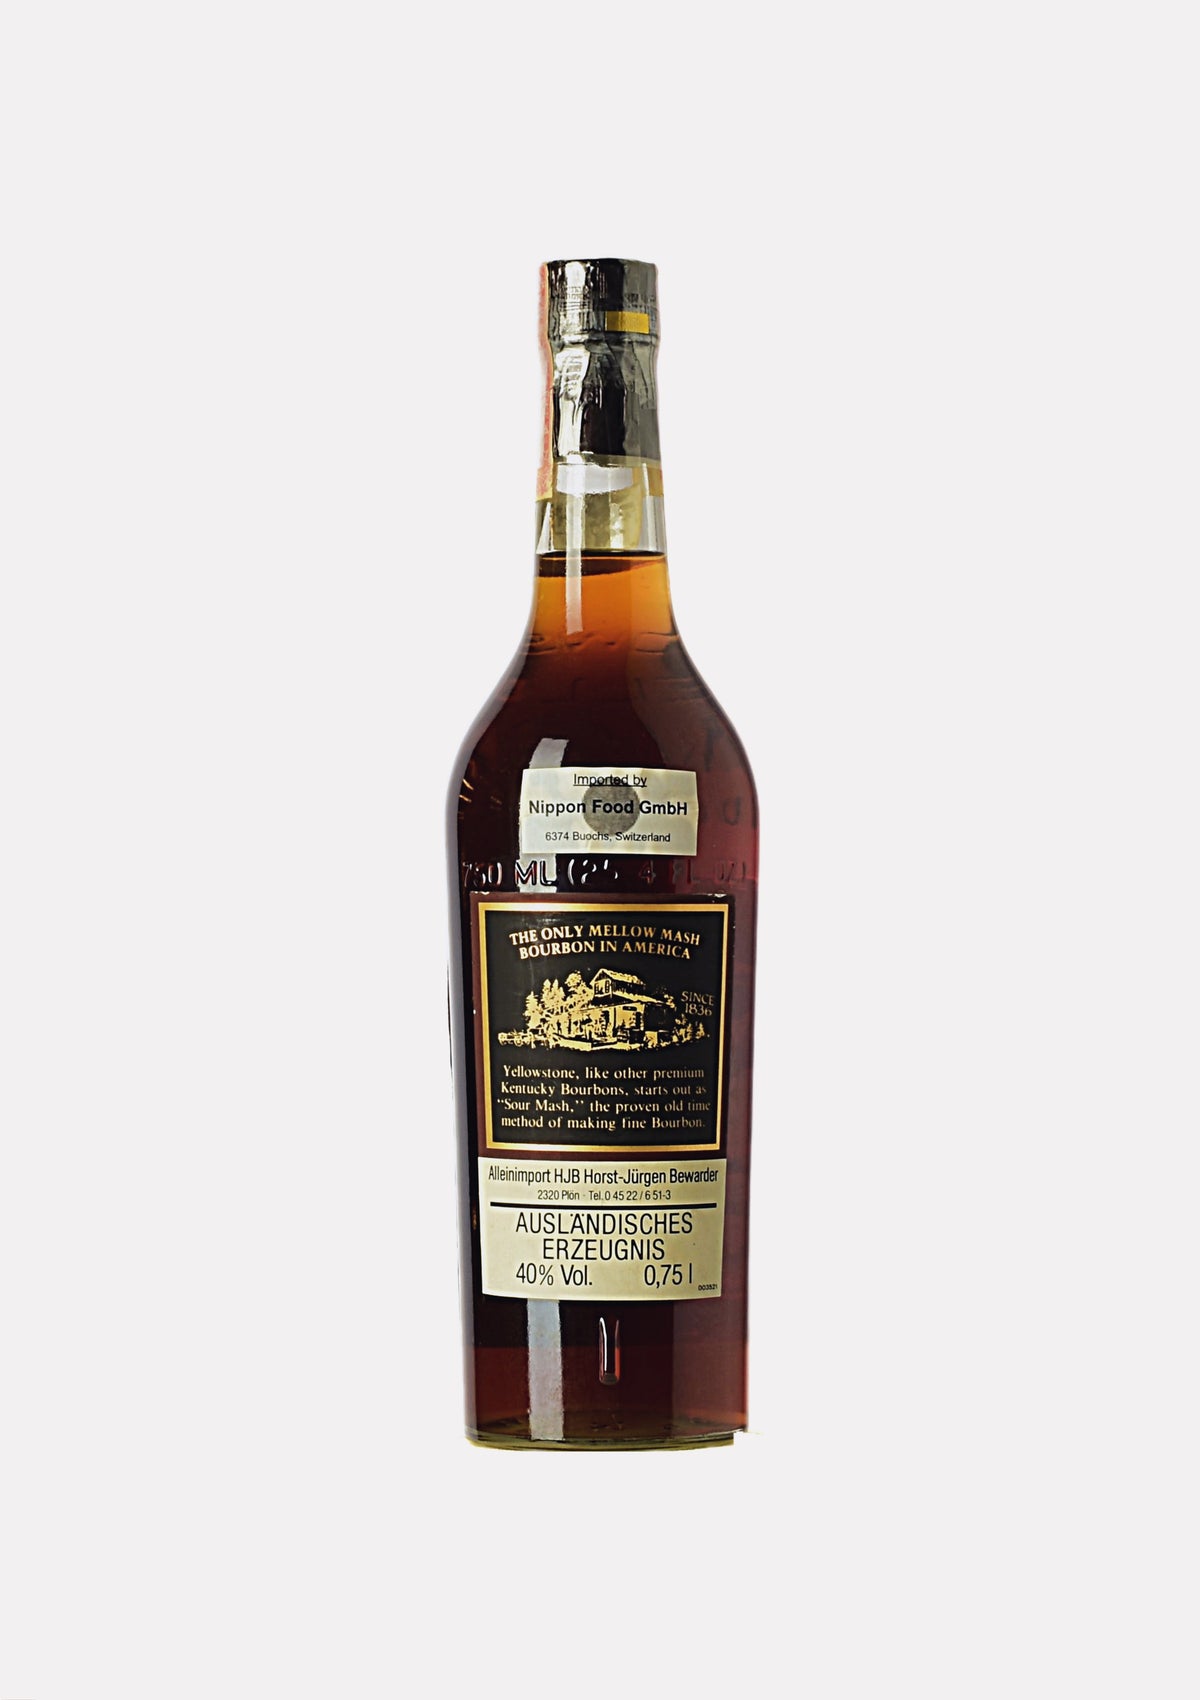 Yellowstone Kentucky Straight Bourbon Whiskey 7 Jahre